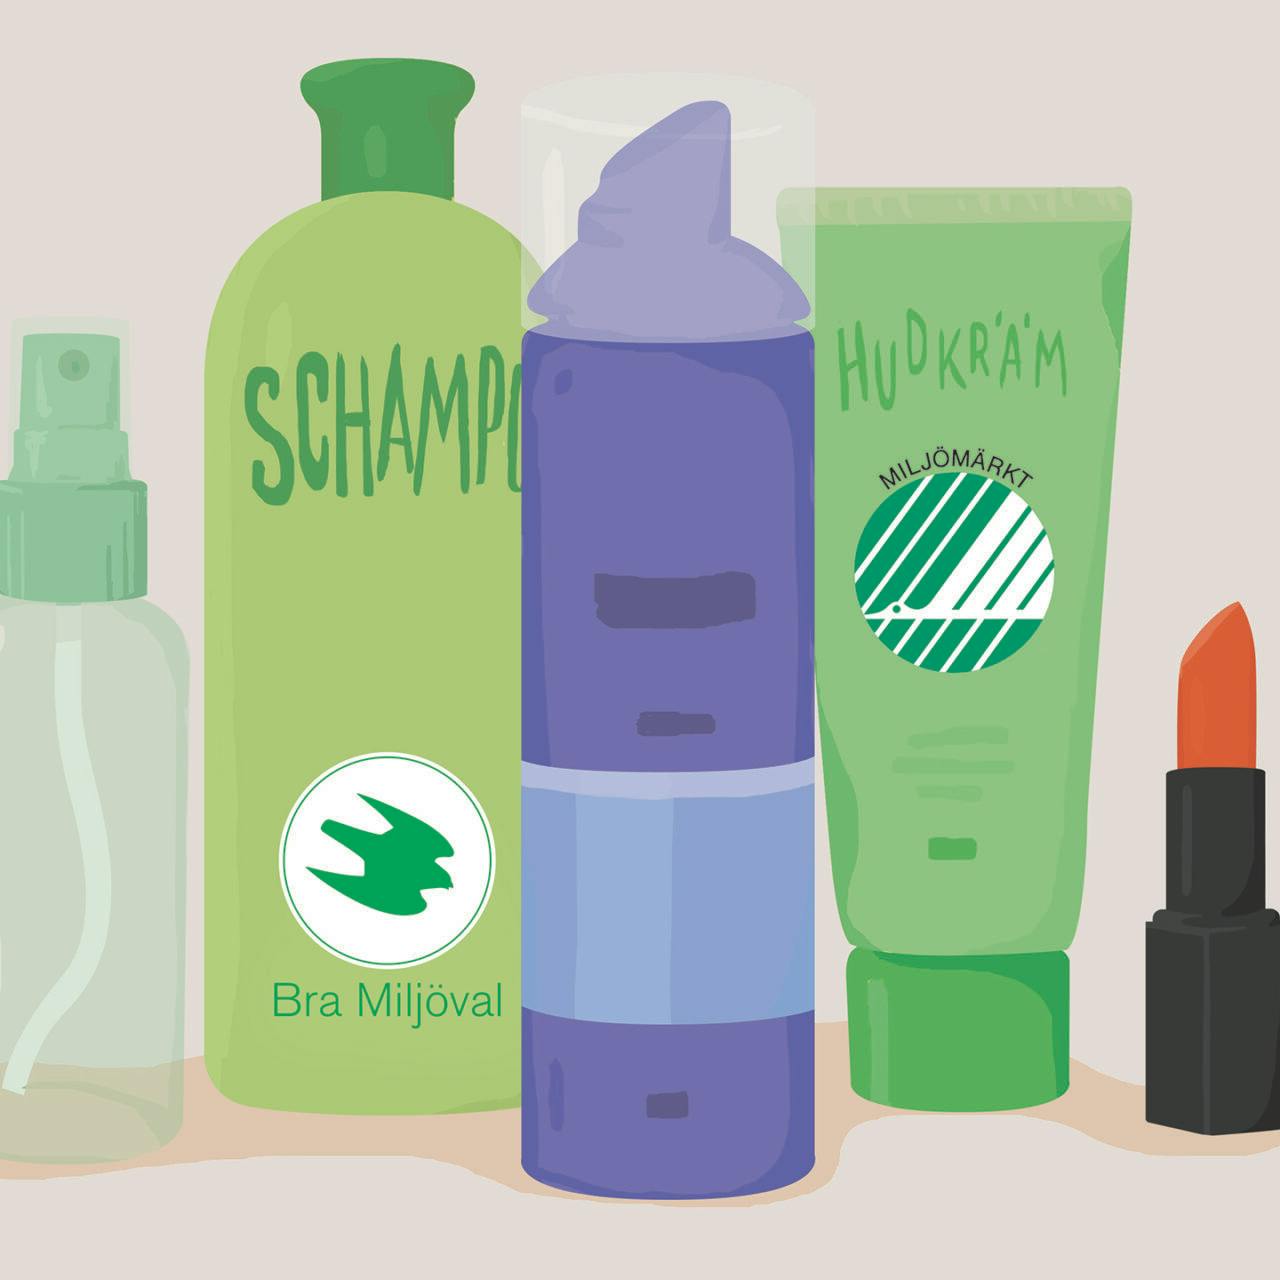 flaskor, flaska, schampo, hudkräm, badrumsprodukter, smink, kosmetika, badrum